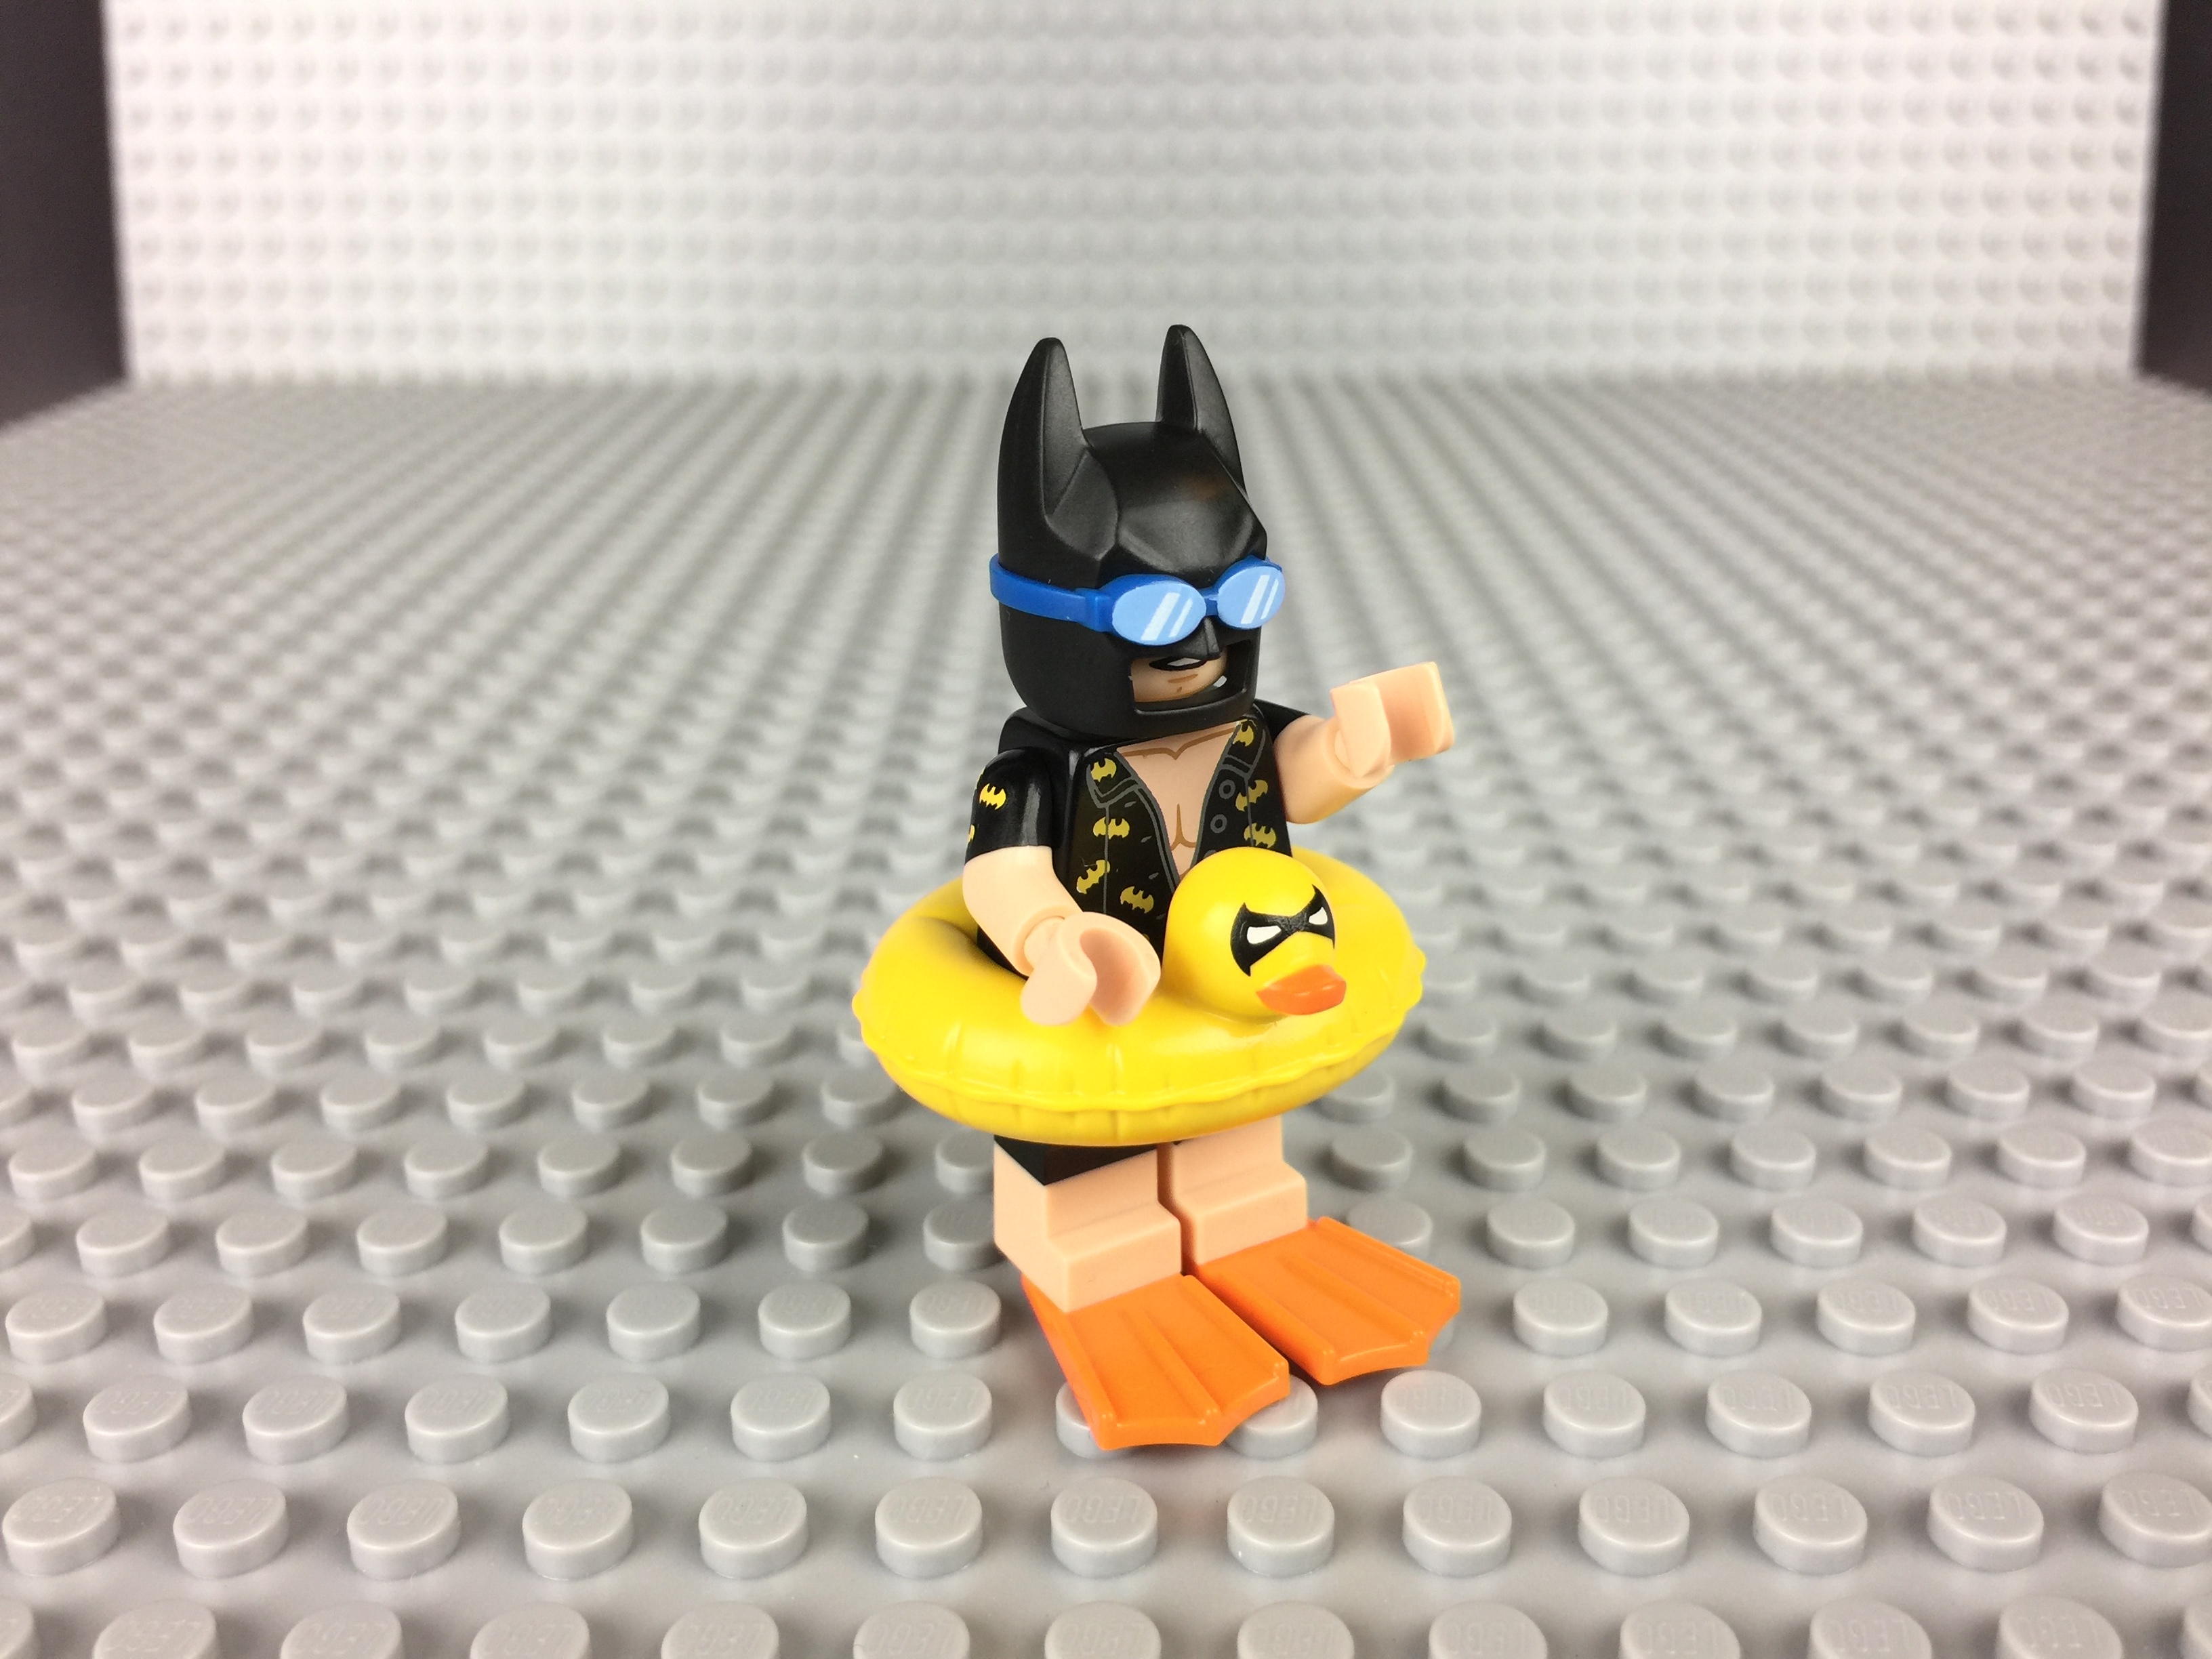 REVIEW: 71017 LEGO Minifigures - LEGO Batman Movie Series - LEGO Licensed -  Eurobricks Forums